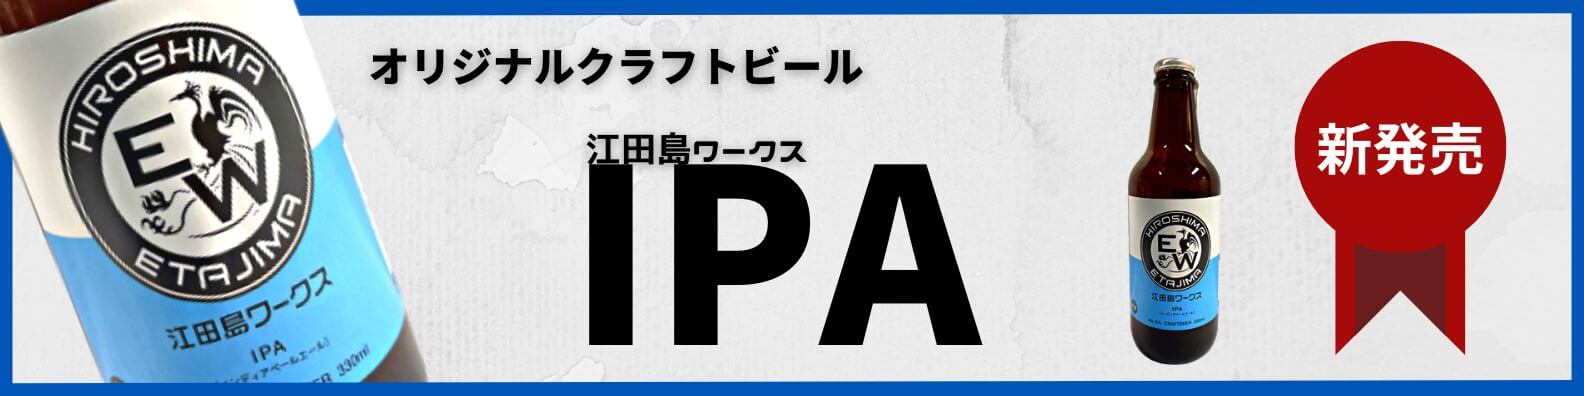 江田島IPA